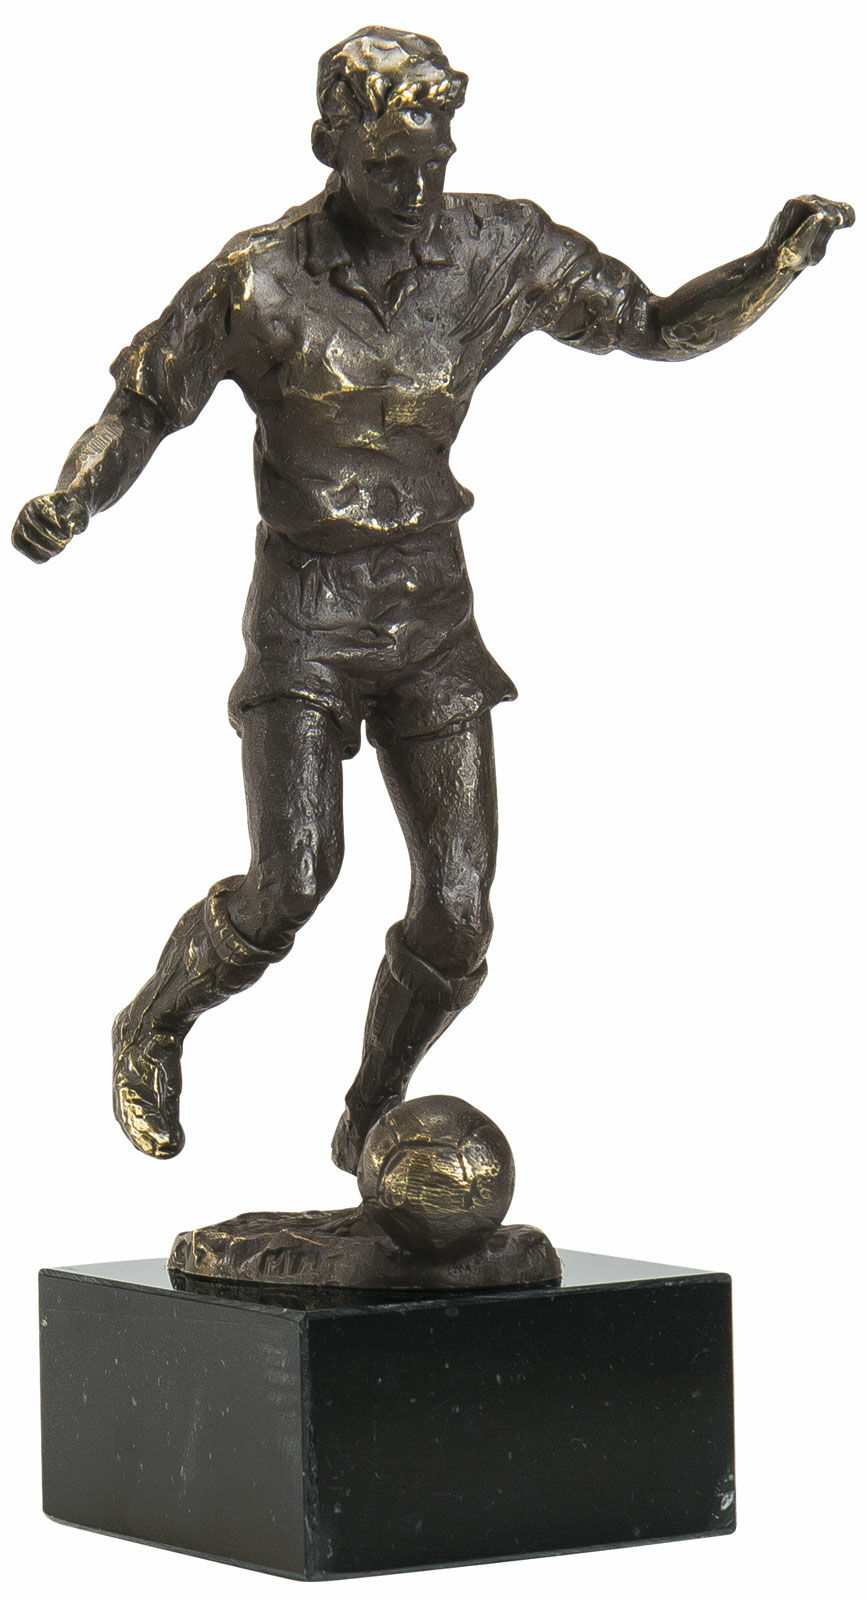 Sculpture "Football Player" by Gerard